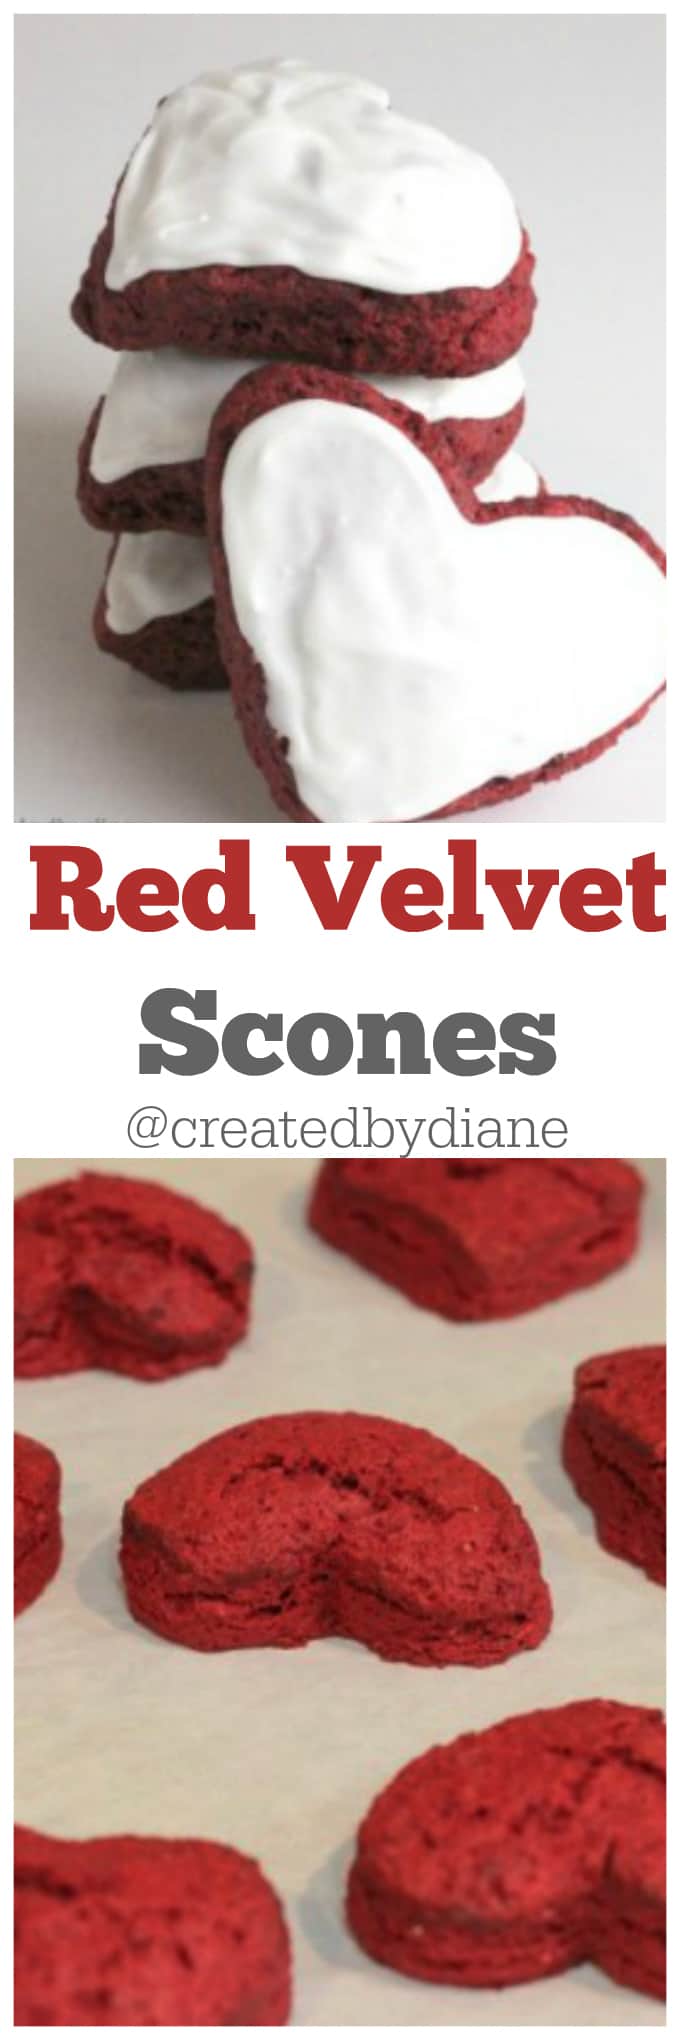 red velvet scone recipe @createdbydiane